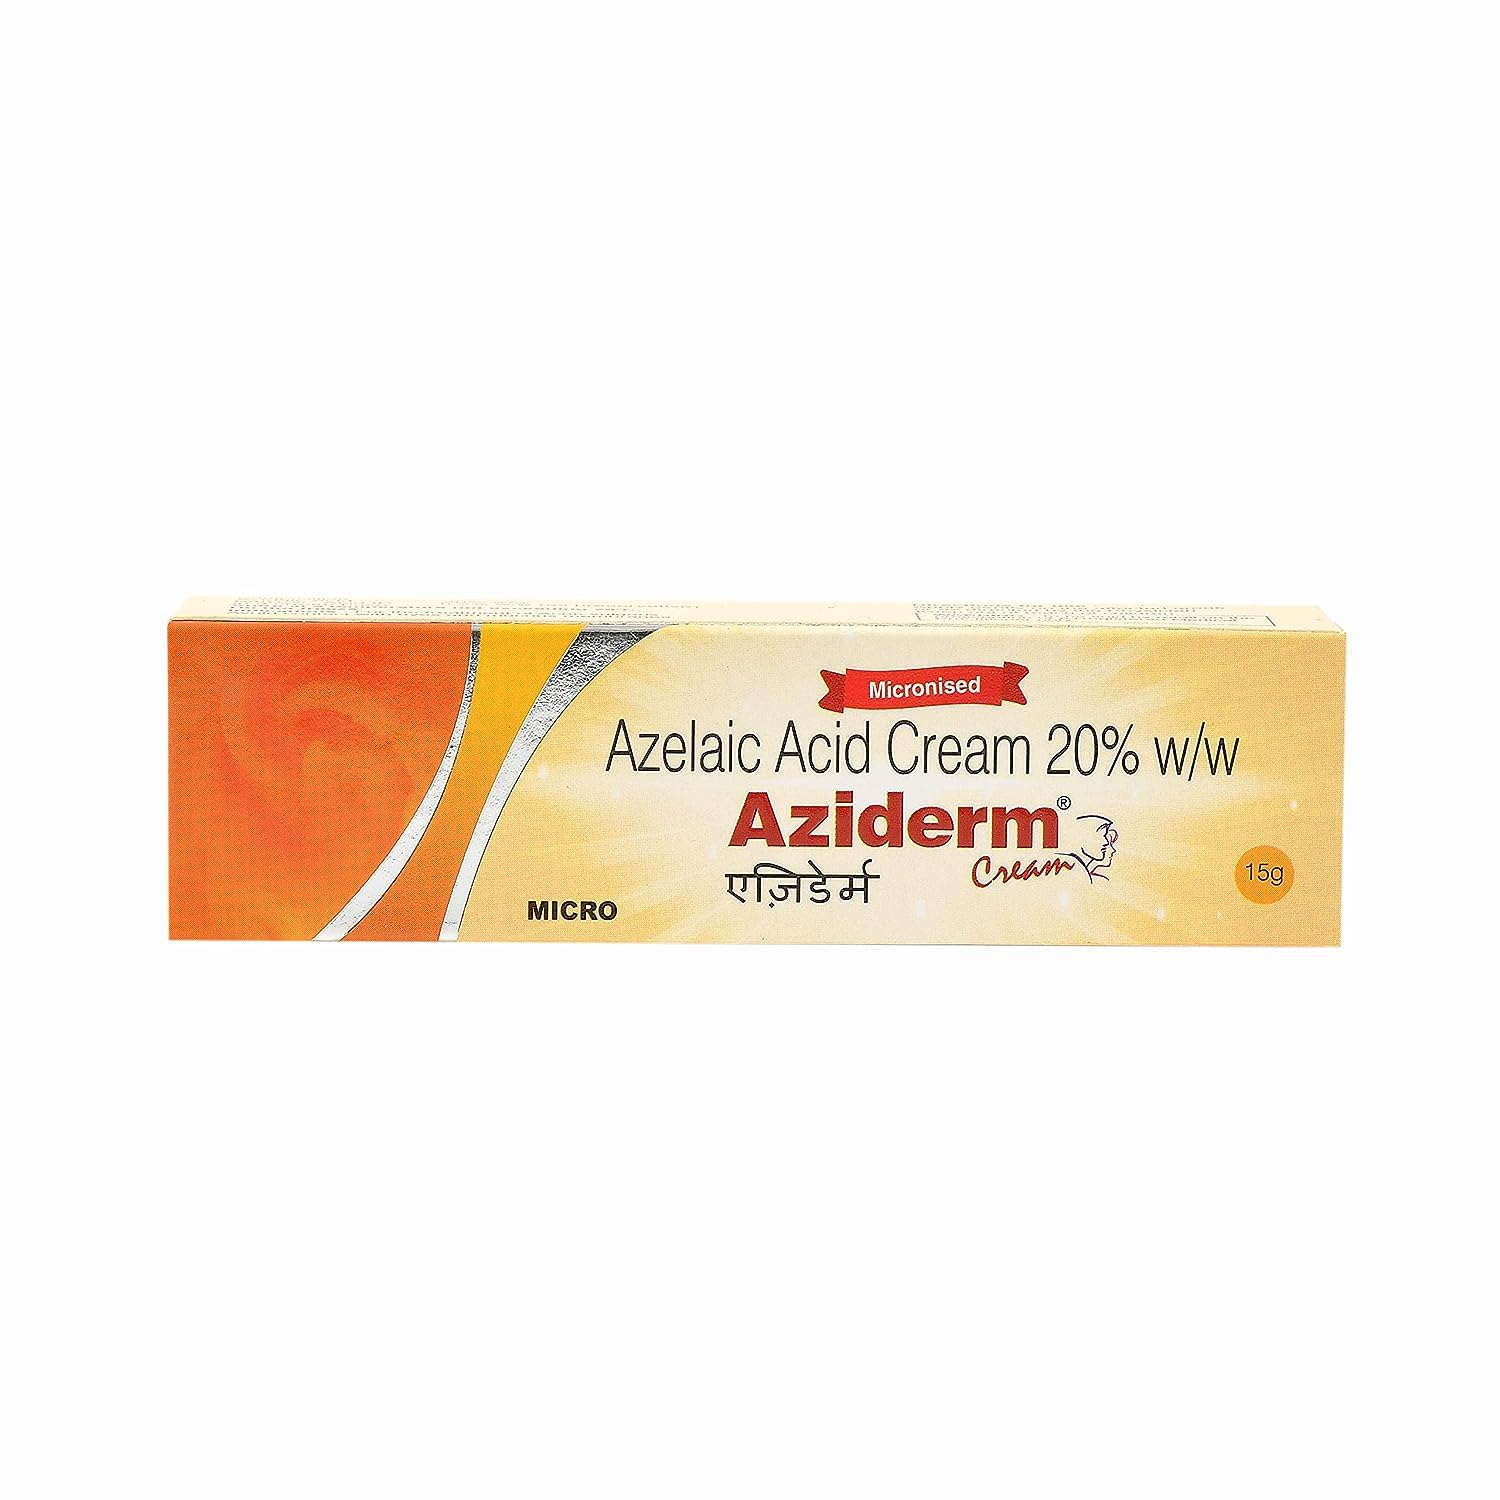 Aziderm 20% cream (15gm)